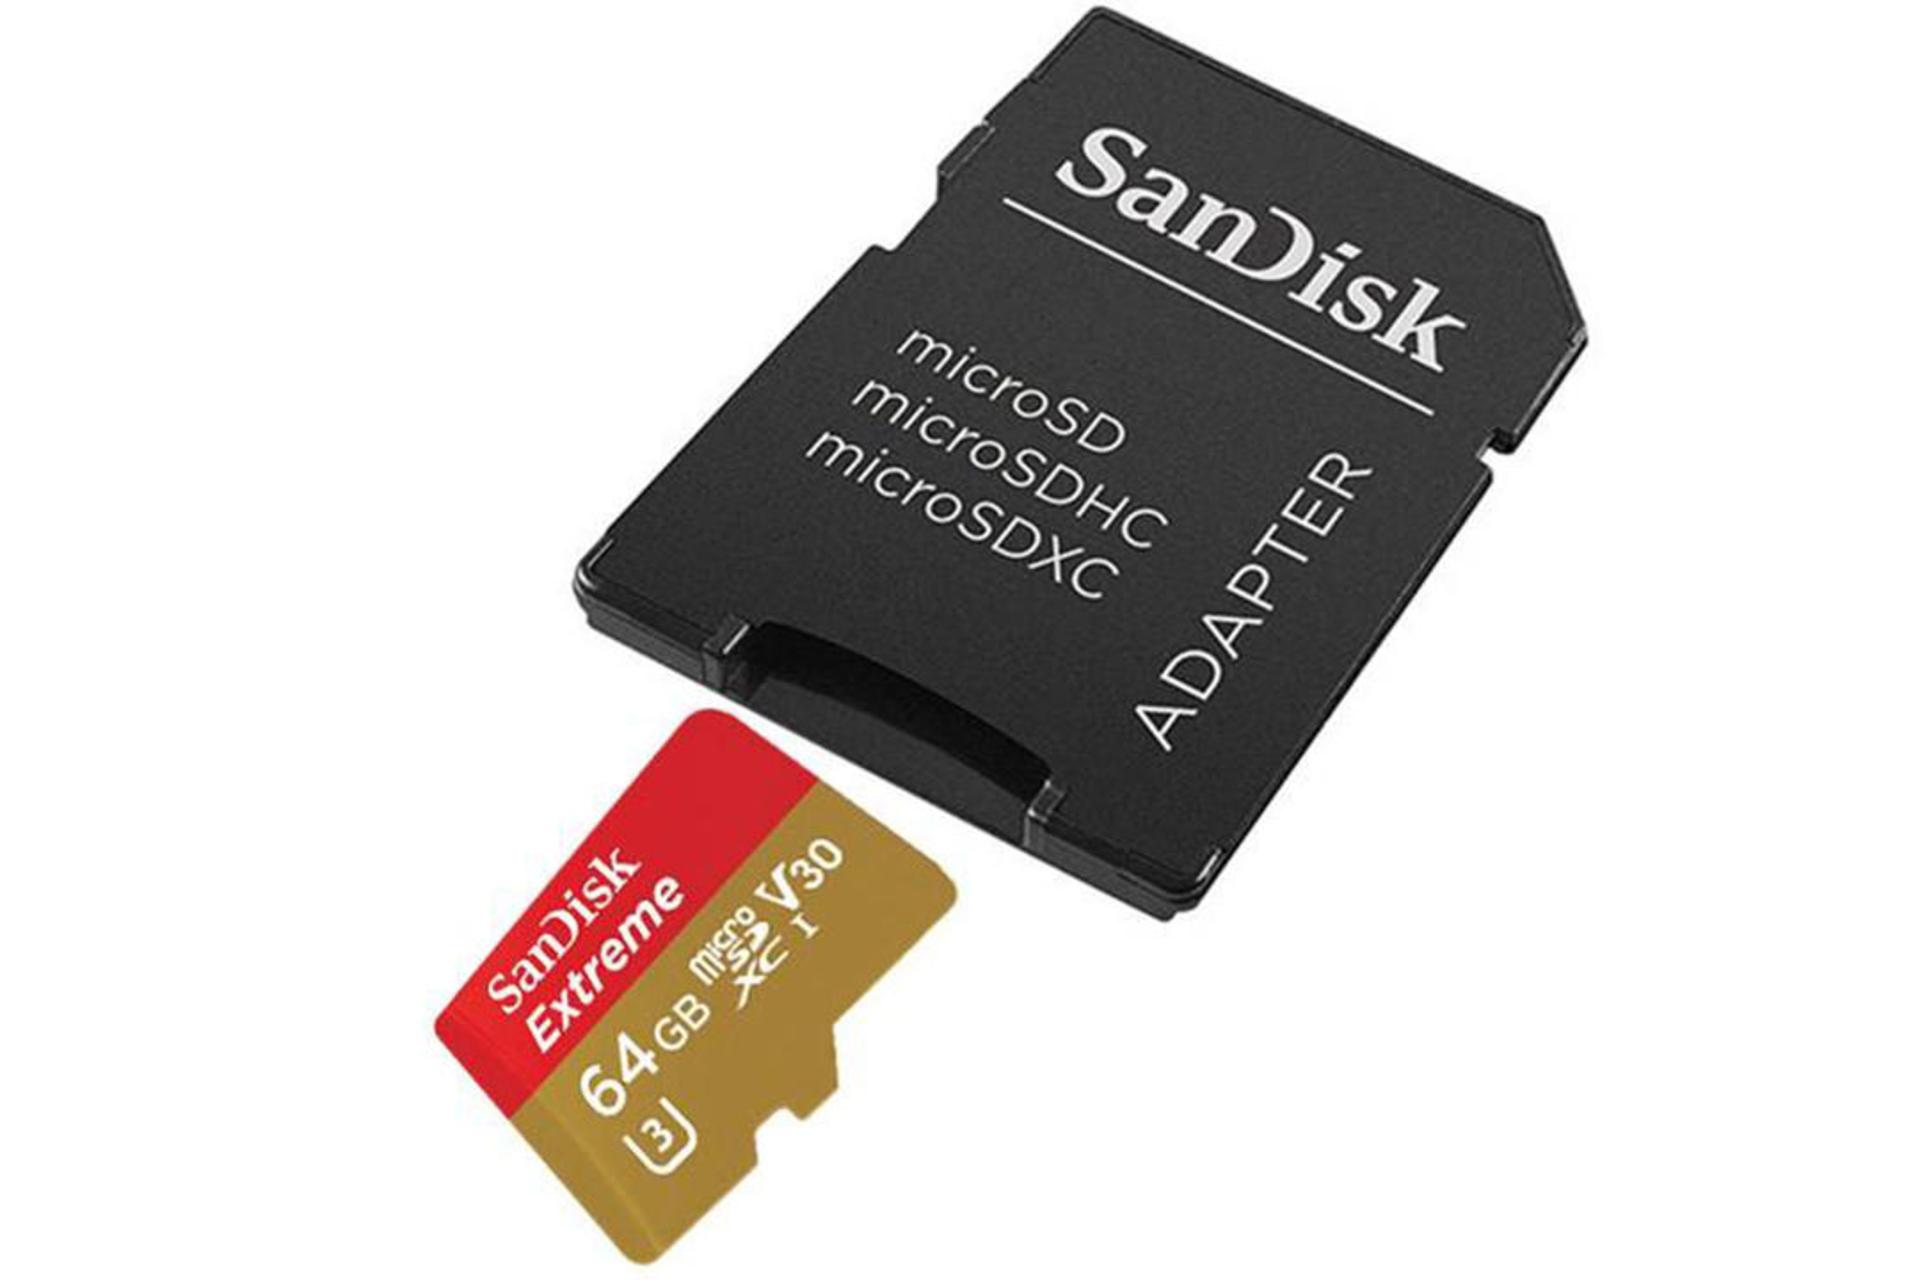 SanDisk Extreme V30 microSDXC Class 10 UHS-I U3 64GB